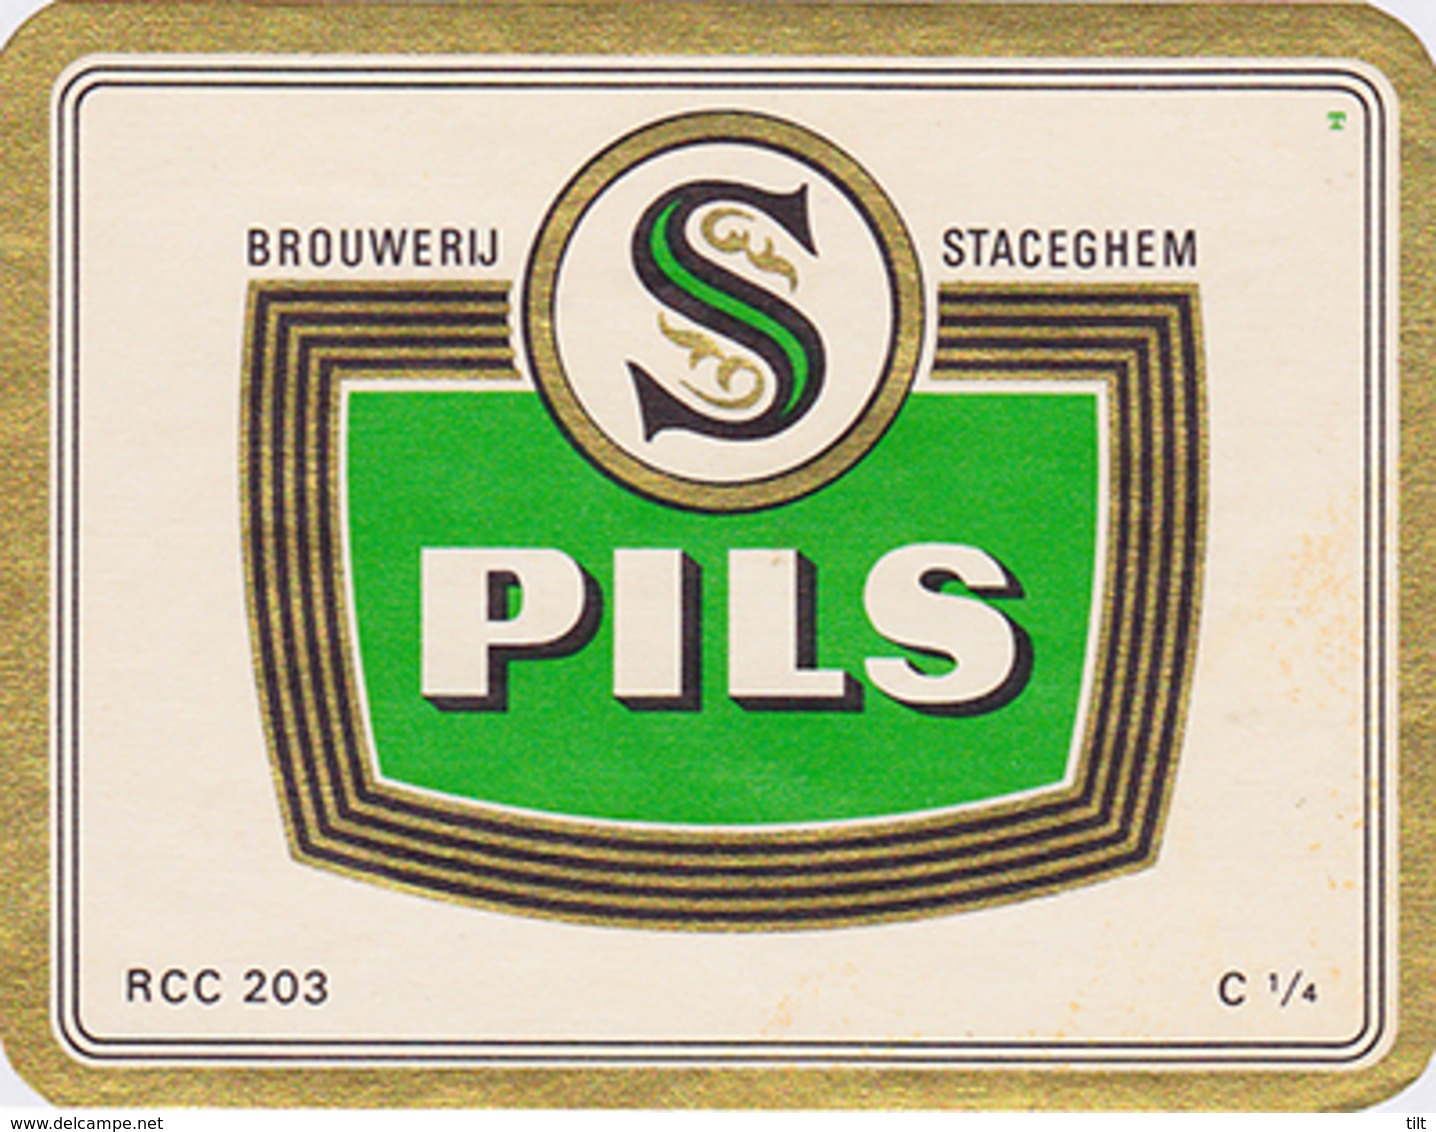 Br. Staceghem (Harelbeke) - Pils - Bière